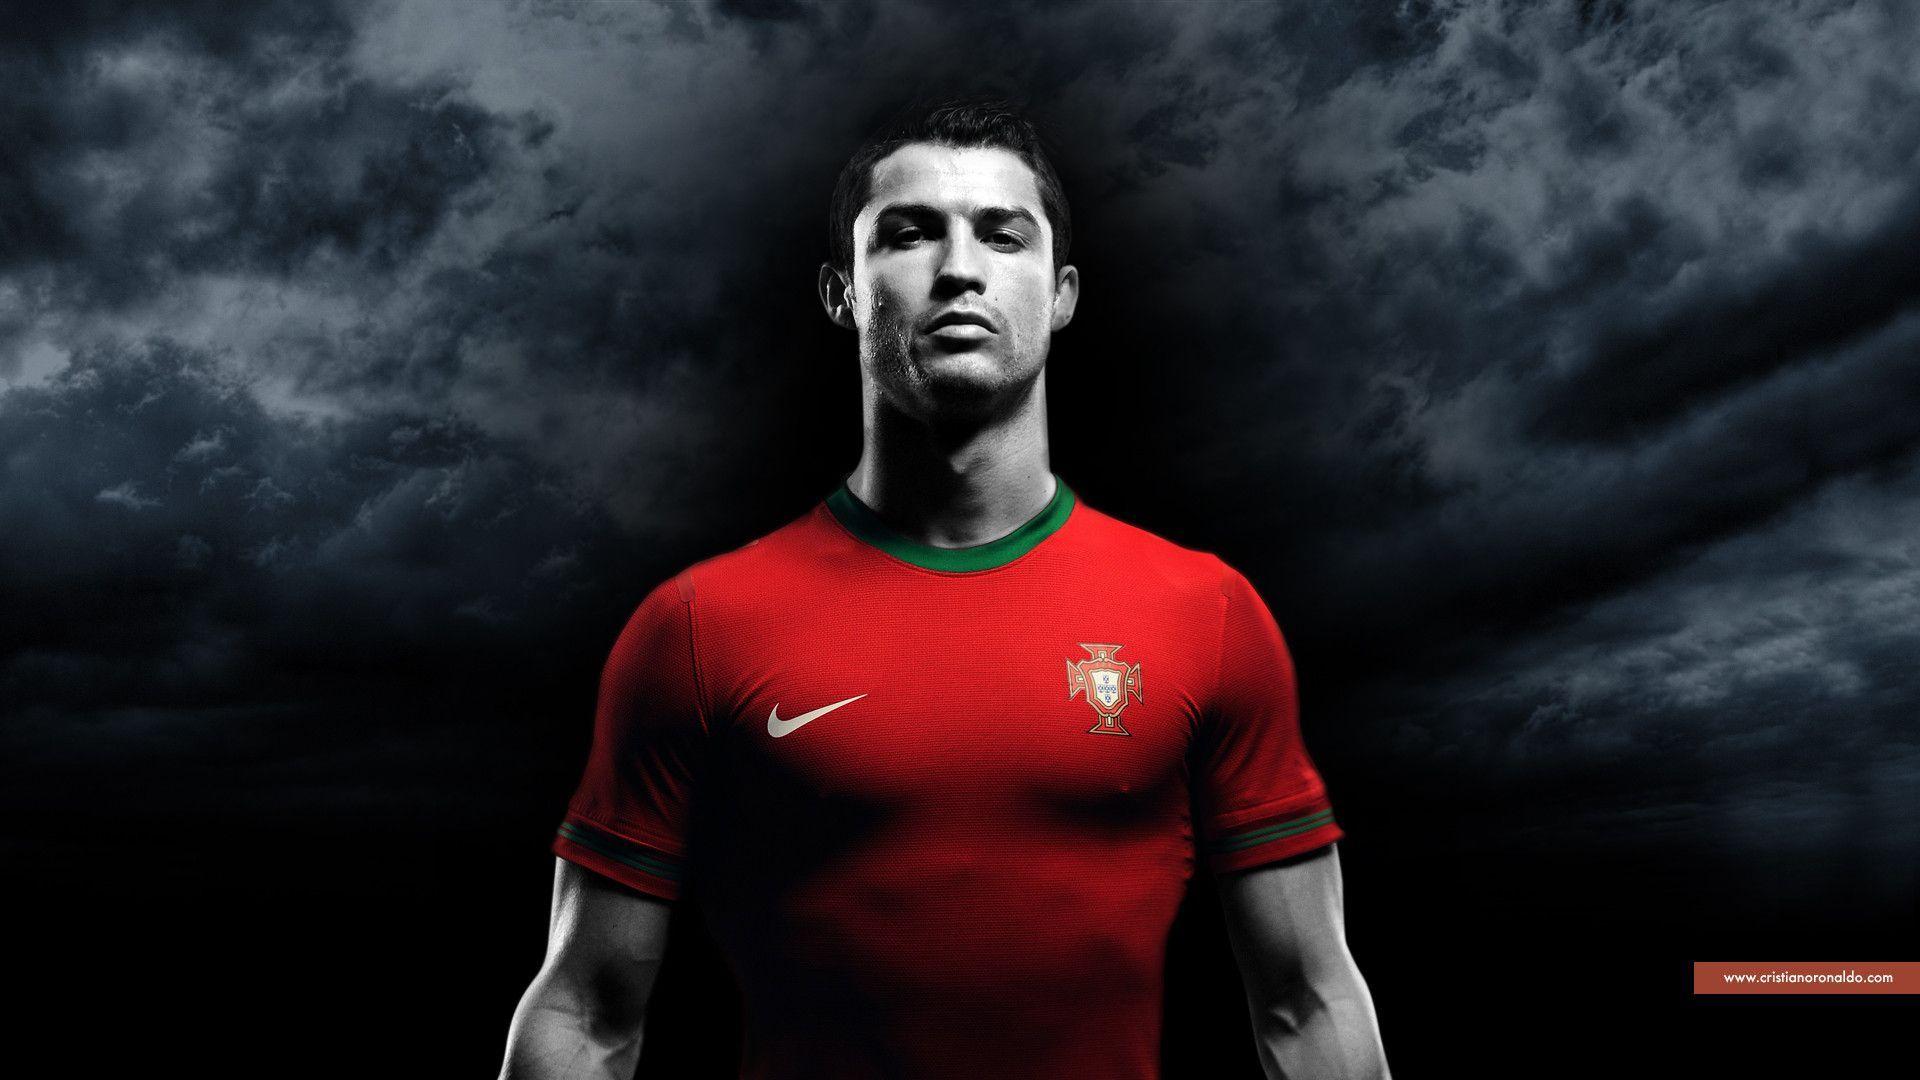 Cristiano Ronaldo 2014 Wallpaper, Full HD Sporteology